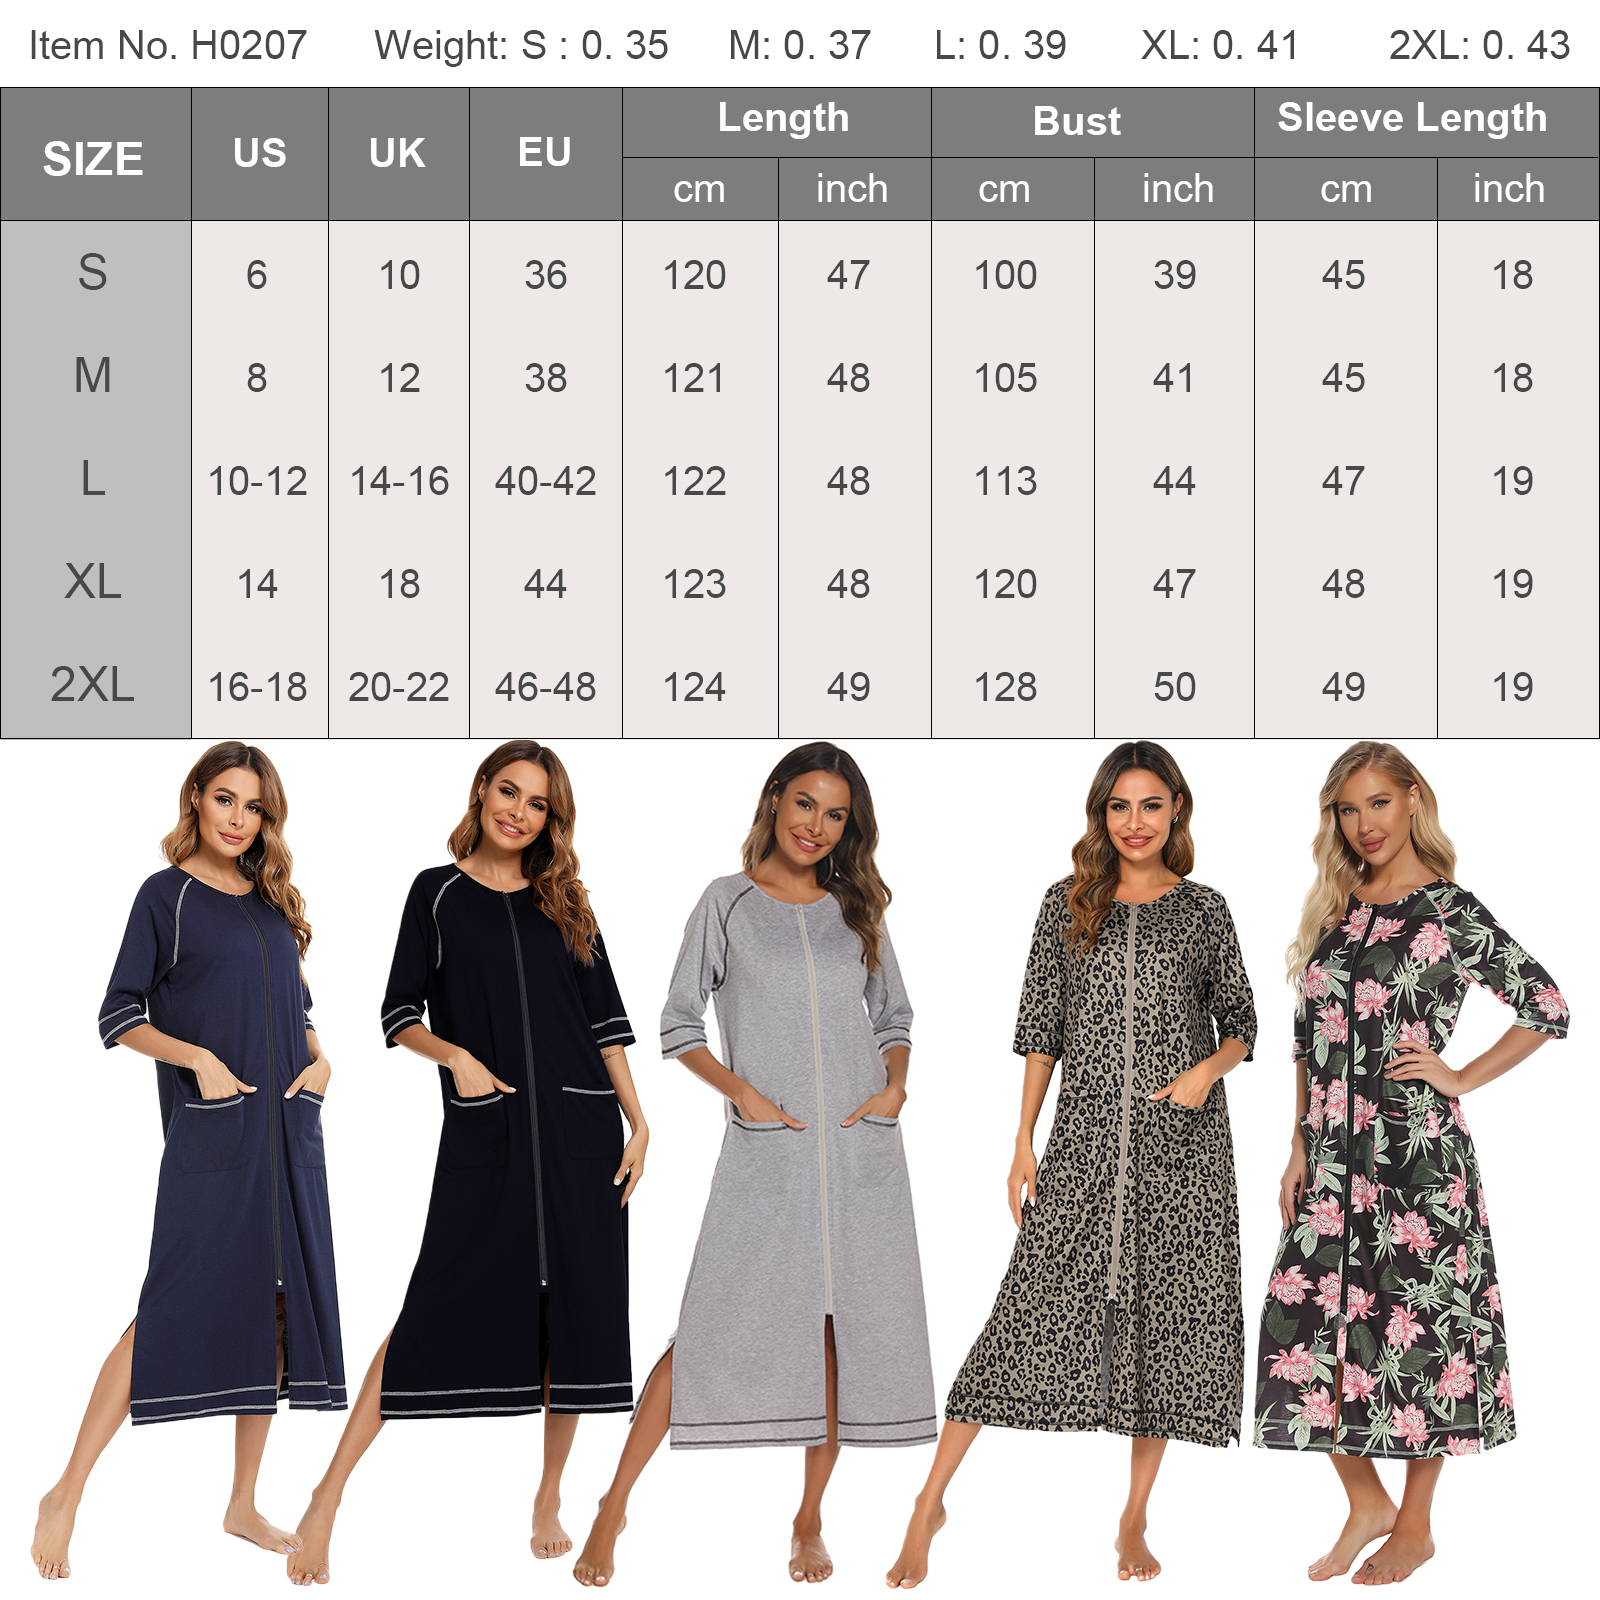 LOFIR Women Zipper Front Robes 3/4 Sleeve Loungewear Pockets Nightgown Loose-Fitting Ladies Long Sleepwear(Black,M) - image 3 of 5